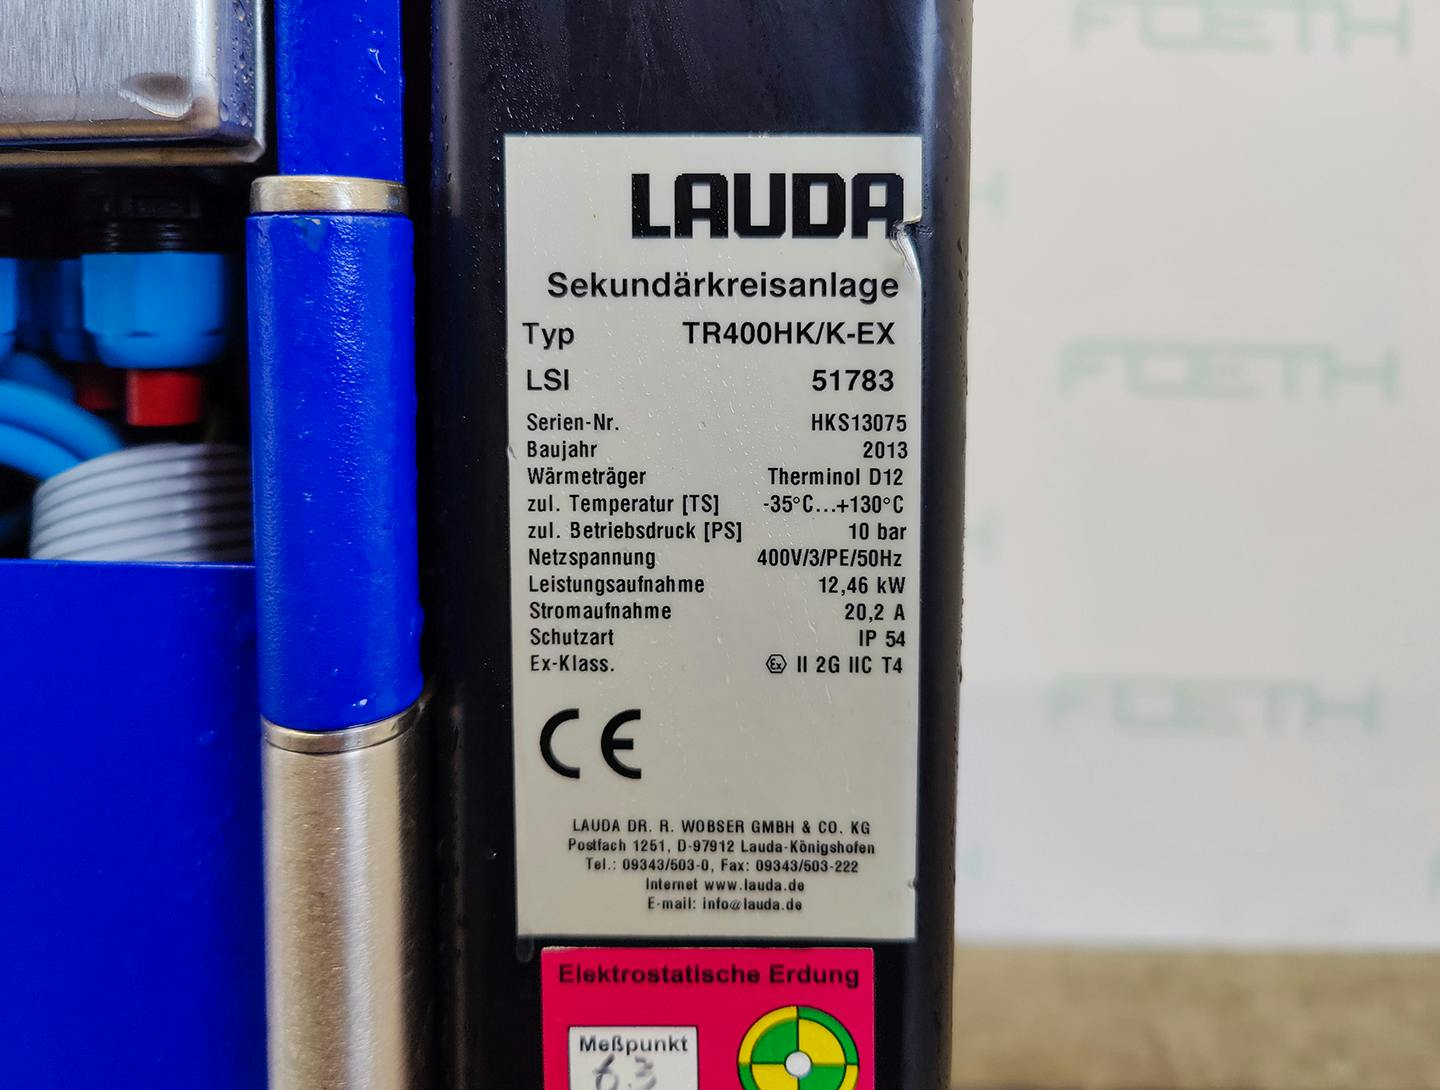 Lauda TR400 HK/K-EX "secondary circuit system" - циркуляционный термостат - image 6